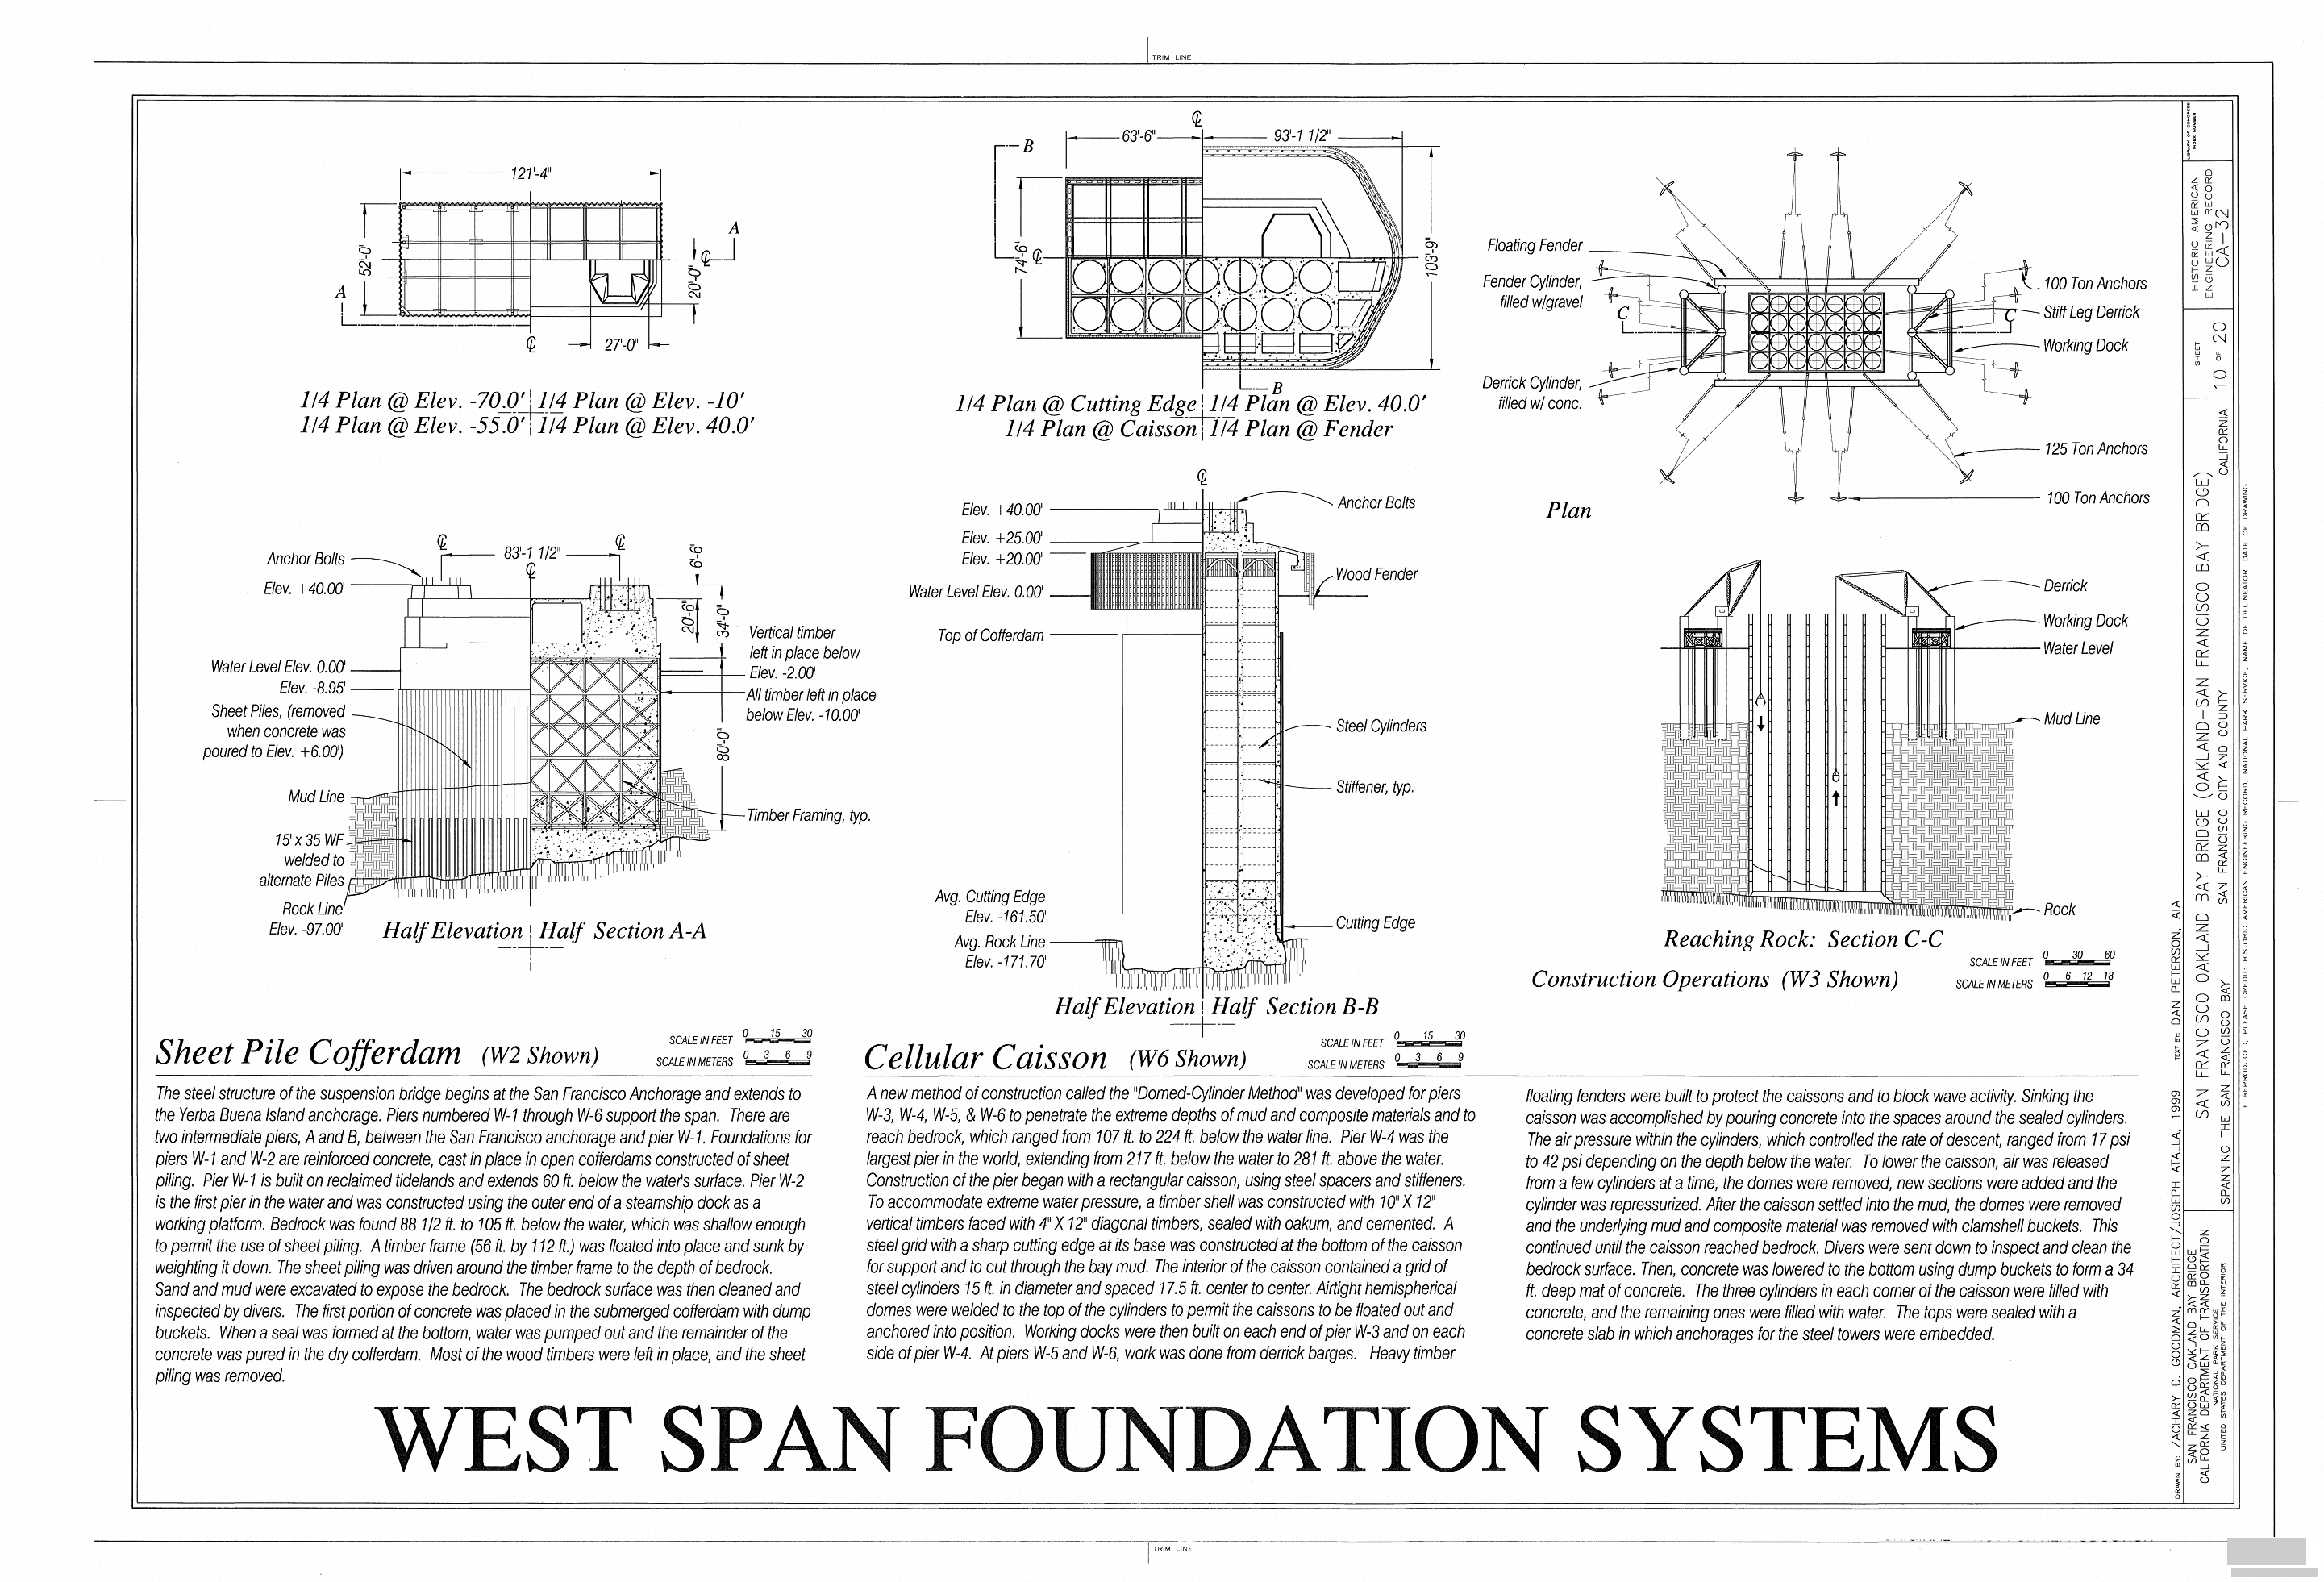 West_Span_Foundation_Systems_-_San_Francisco_Oakland_Bay_Bridge,_Spanning_San_Fr.png